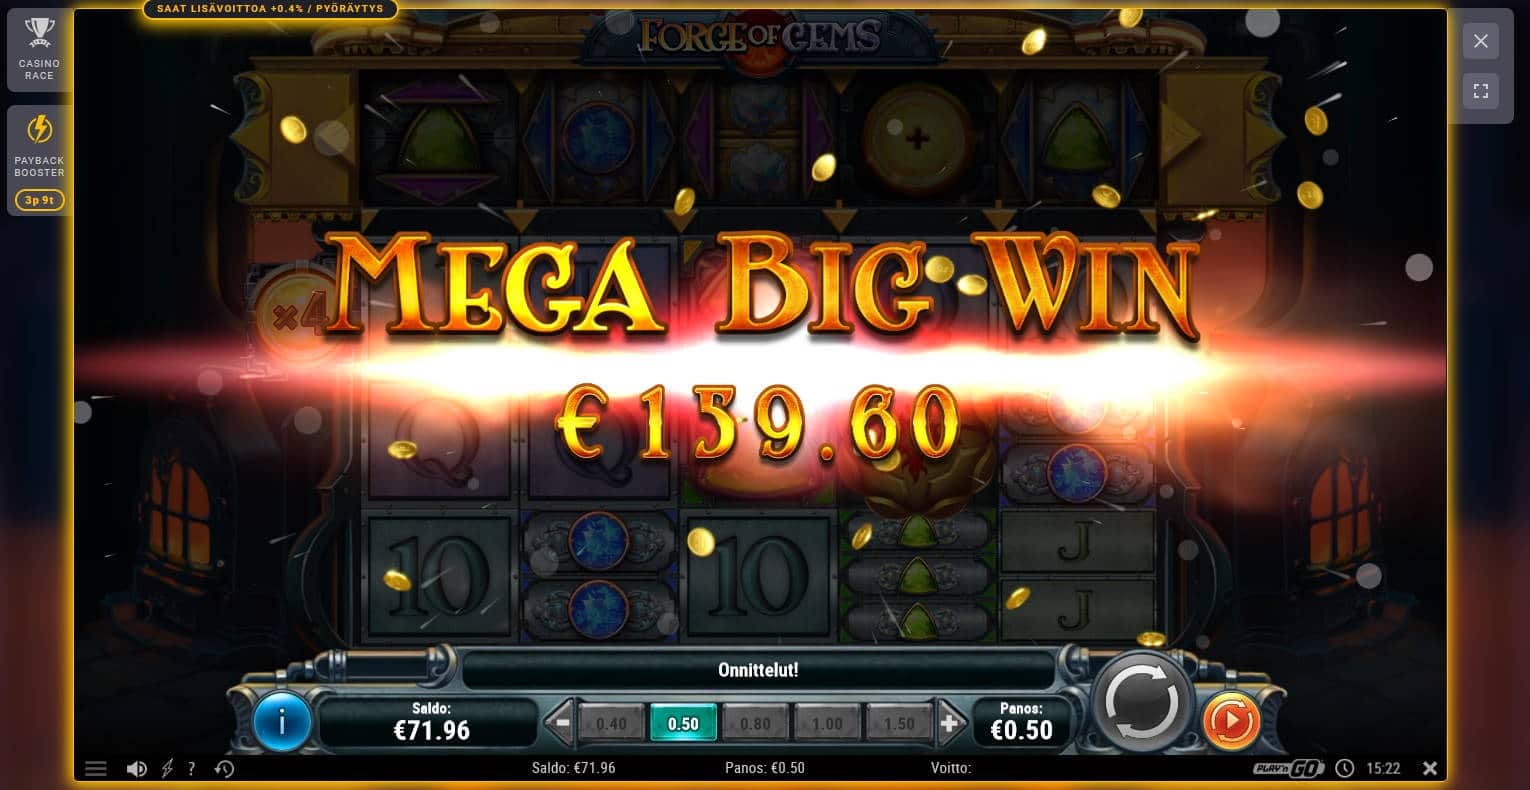 Forge of Gems Casino win picture by MrMork 14.4.2022 159.60e 319X